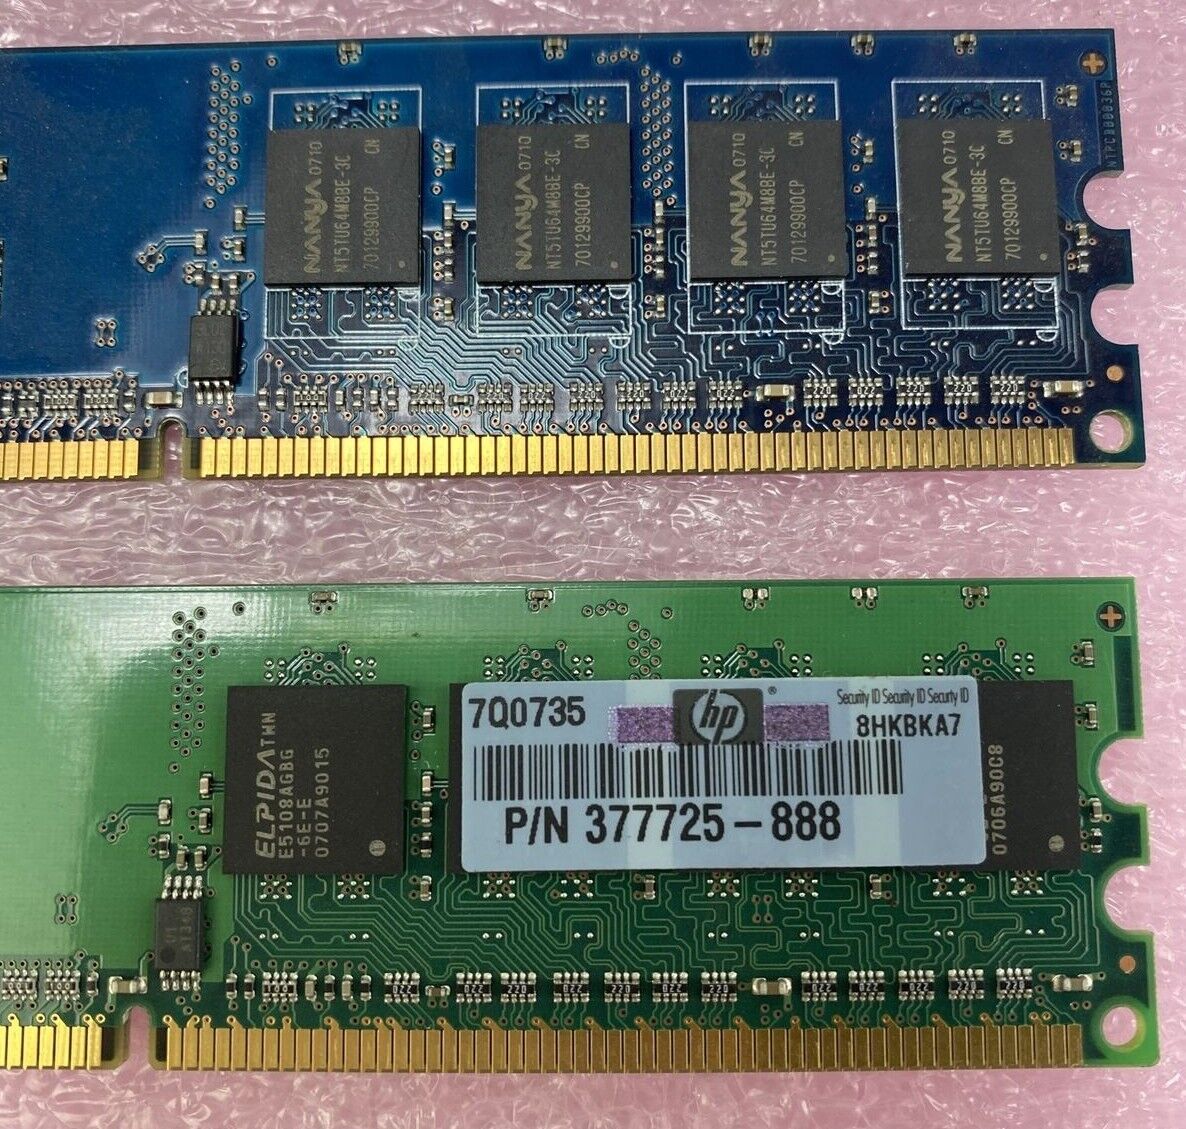 2x512MB 1Rx8 PC2-5300U-555 667MHz DDR2 memory RAM Nanya + Elpida